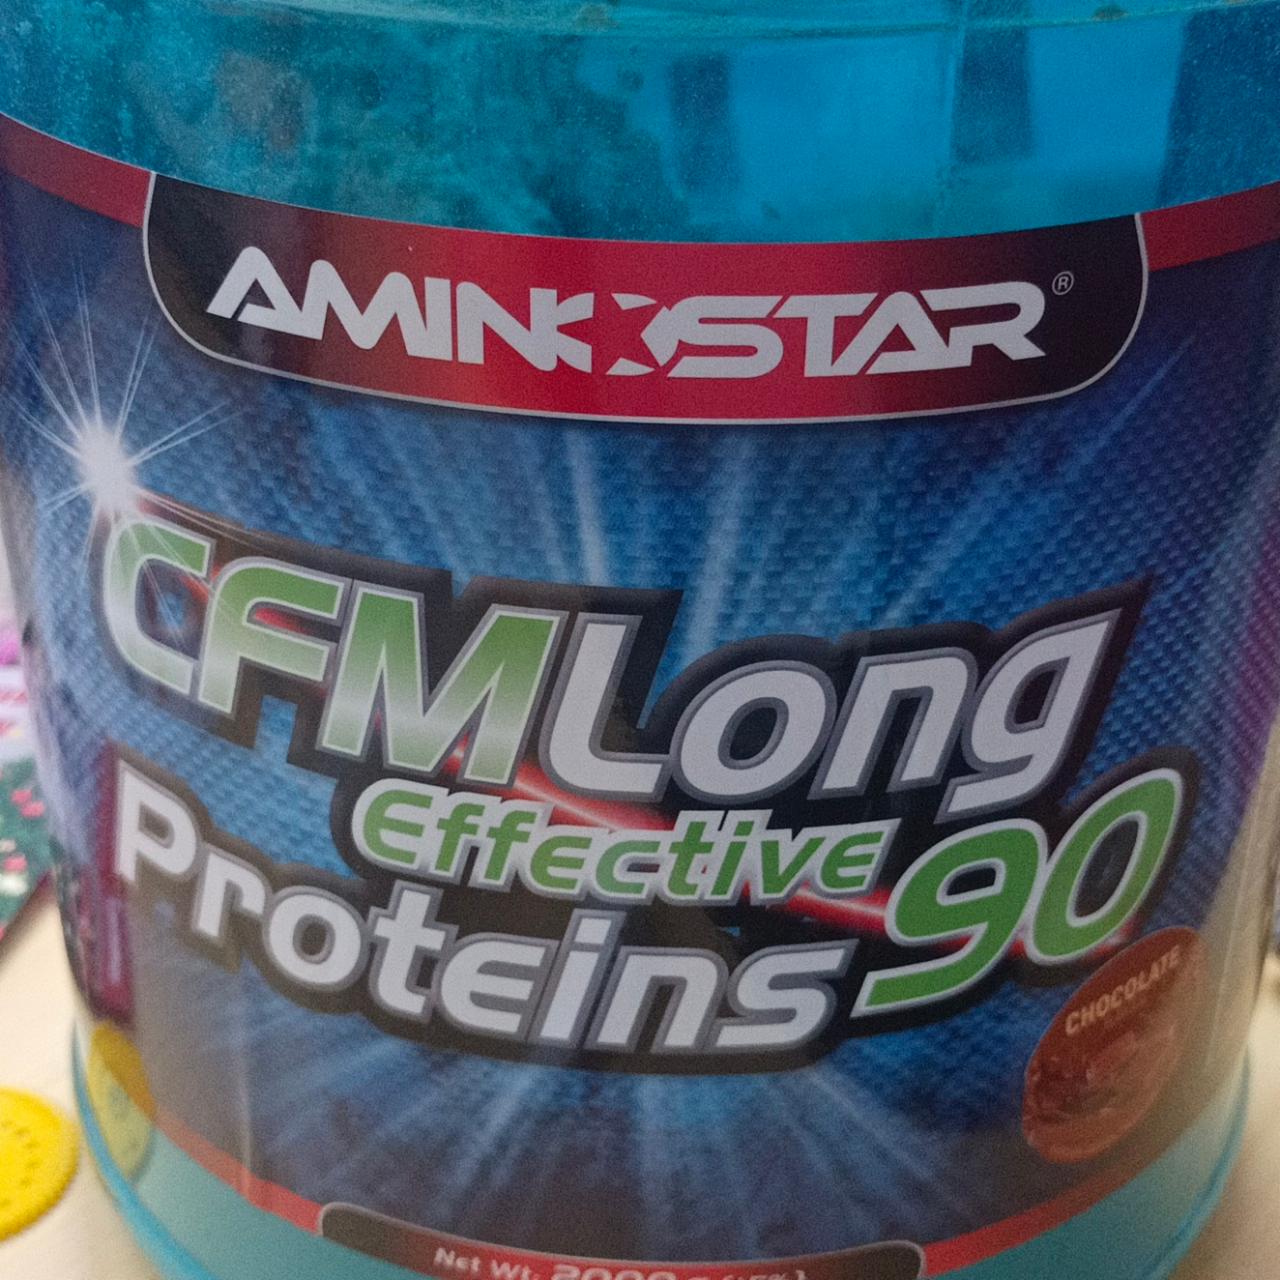 Fotografie - CFMLong Effective Proteins 90 Chocolate Aminostar